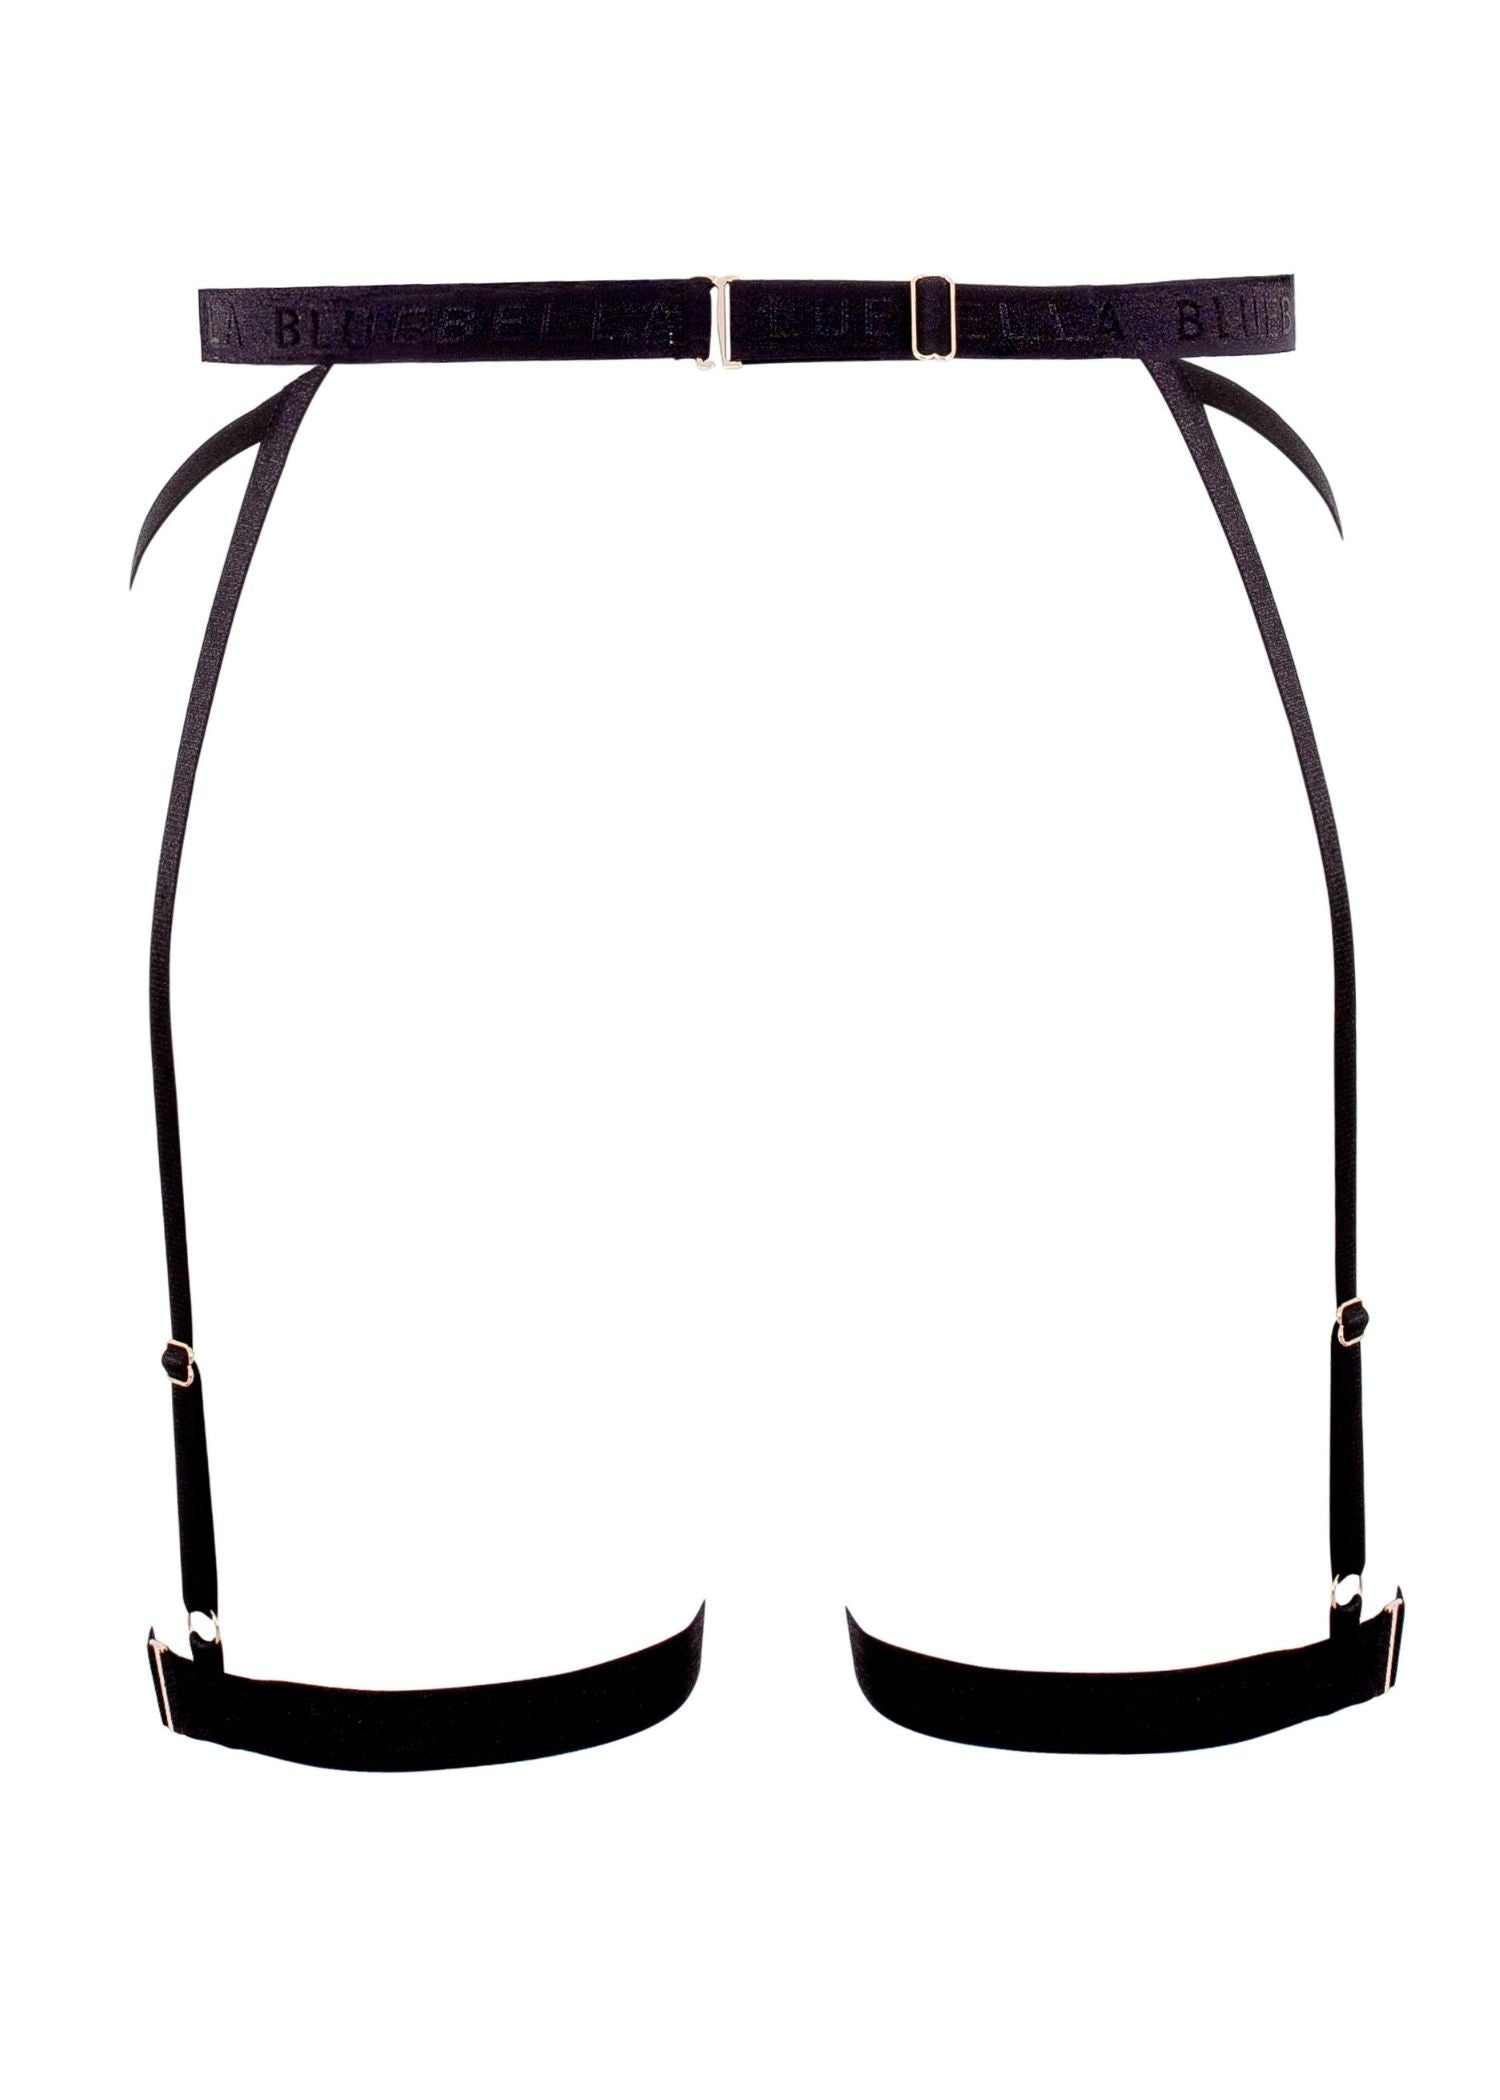 Bluebella Oslo Thigh Harness Garter Belt - Sexy Lingerie, Luxury Lingerie - Avec Amour Online Boutique